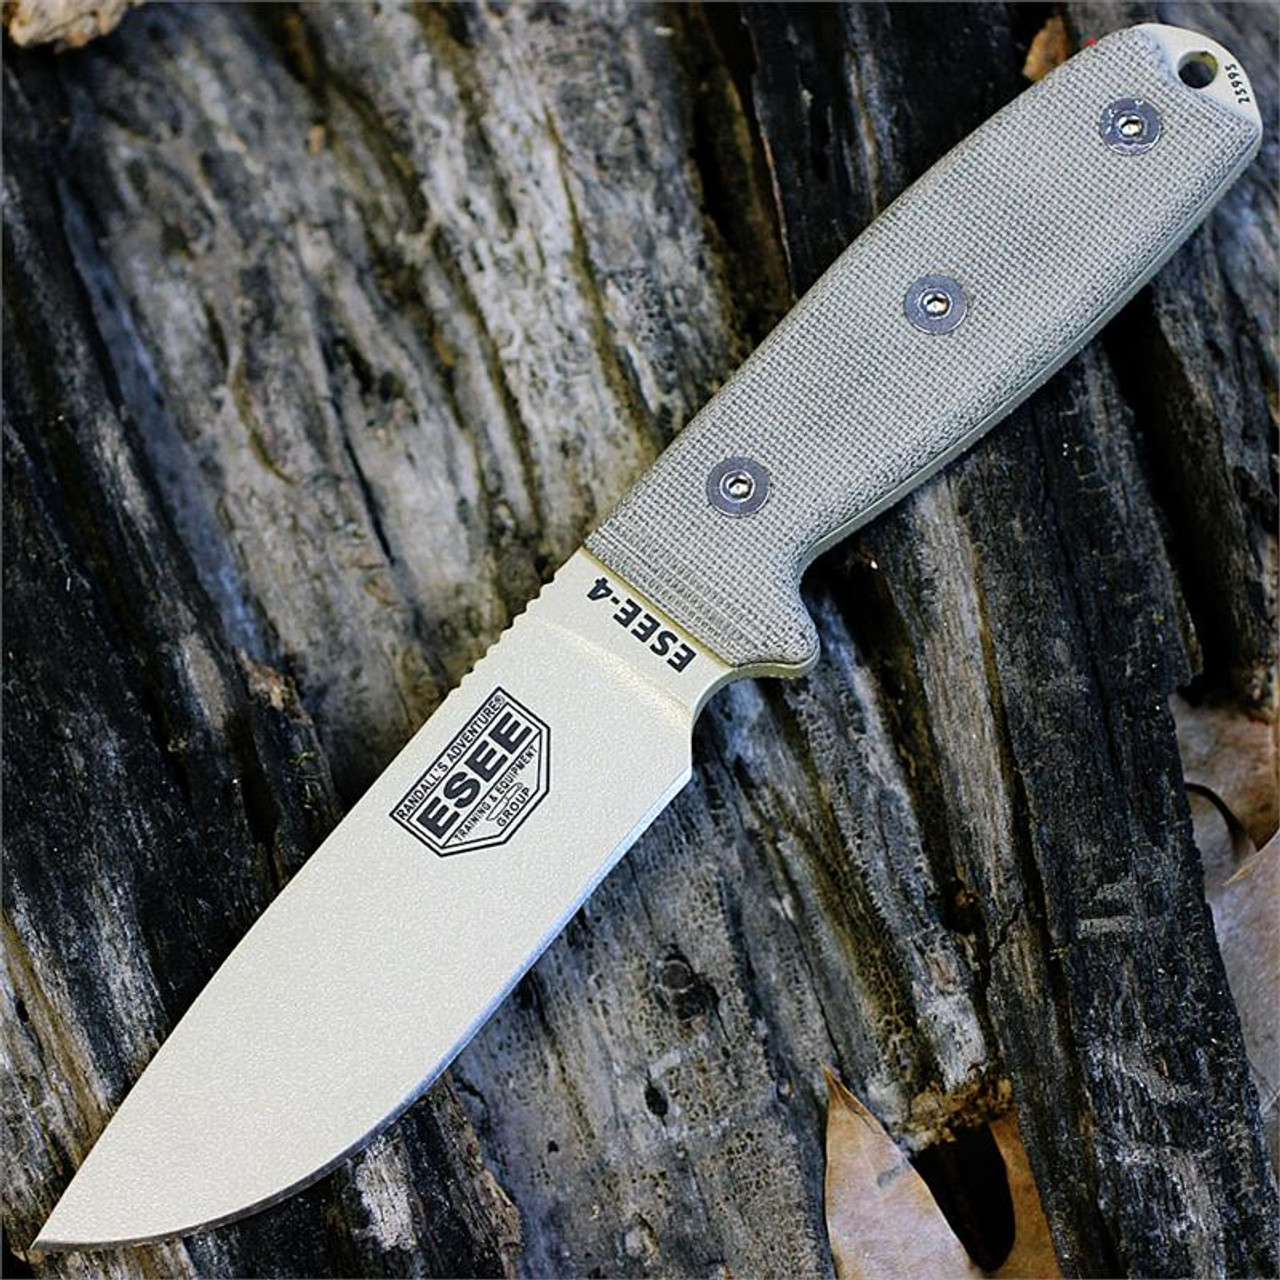 ESEE-4 Fixed Blade Knife (ESEE-4P-MB-DT)- 4.50" Desert Tan 1095 Drop Point Blade, Tan Micarta Handle